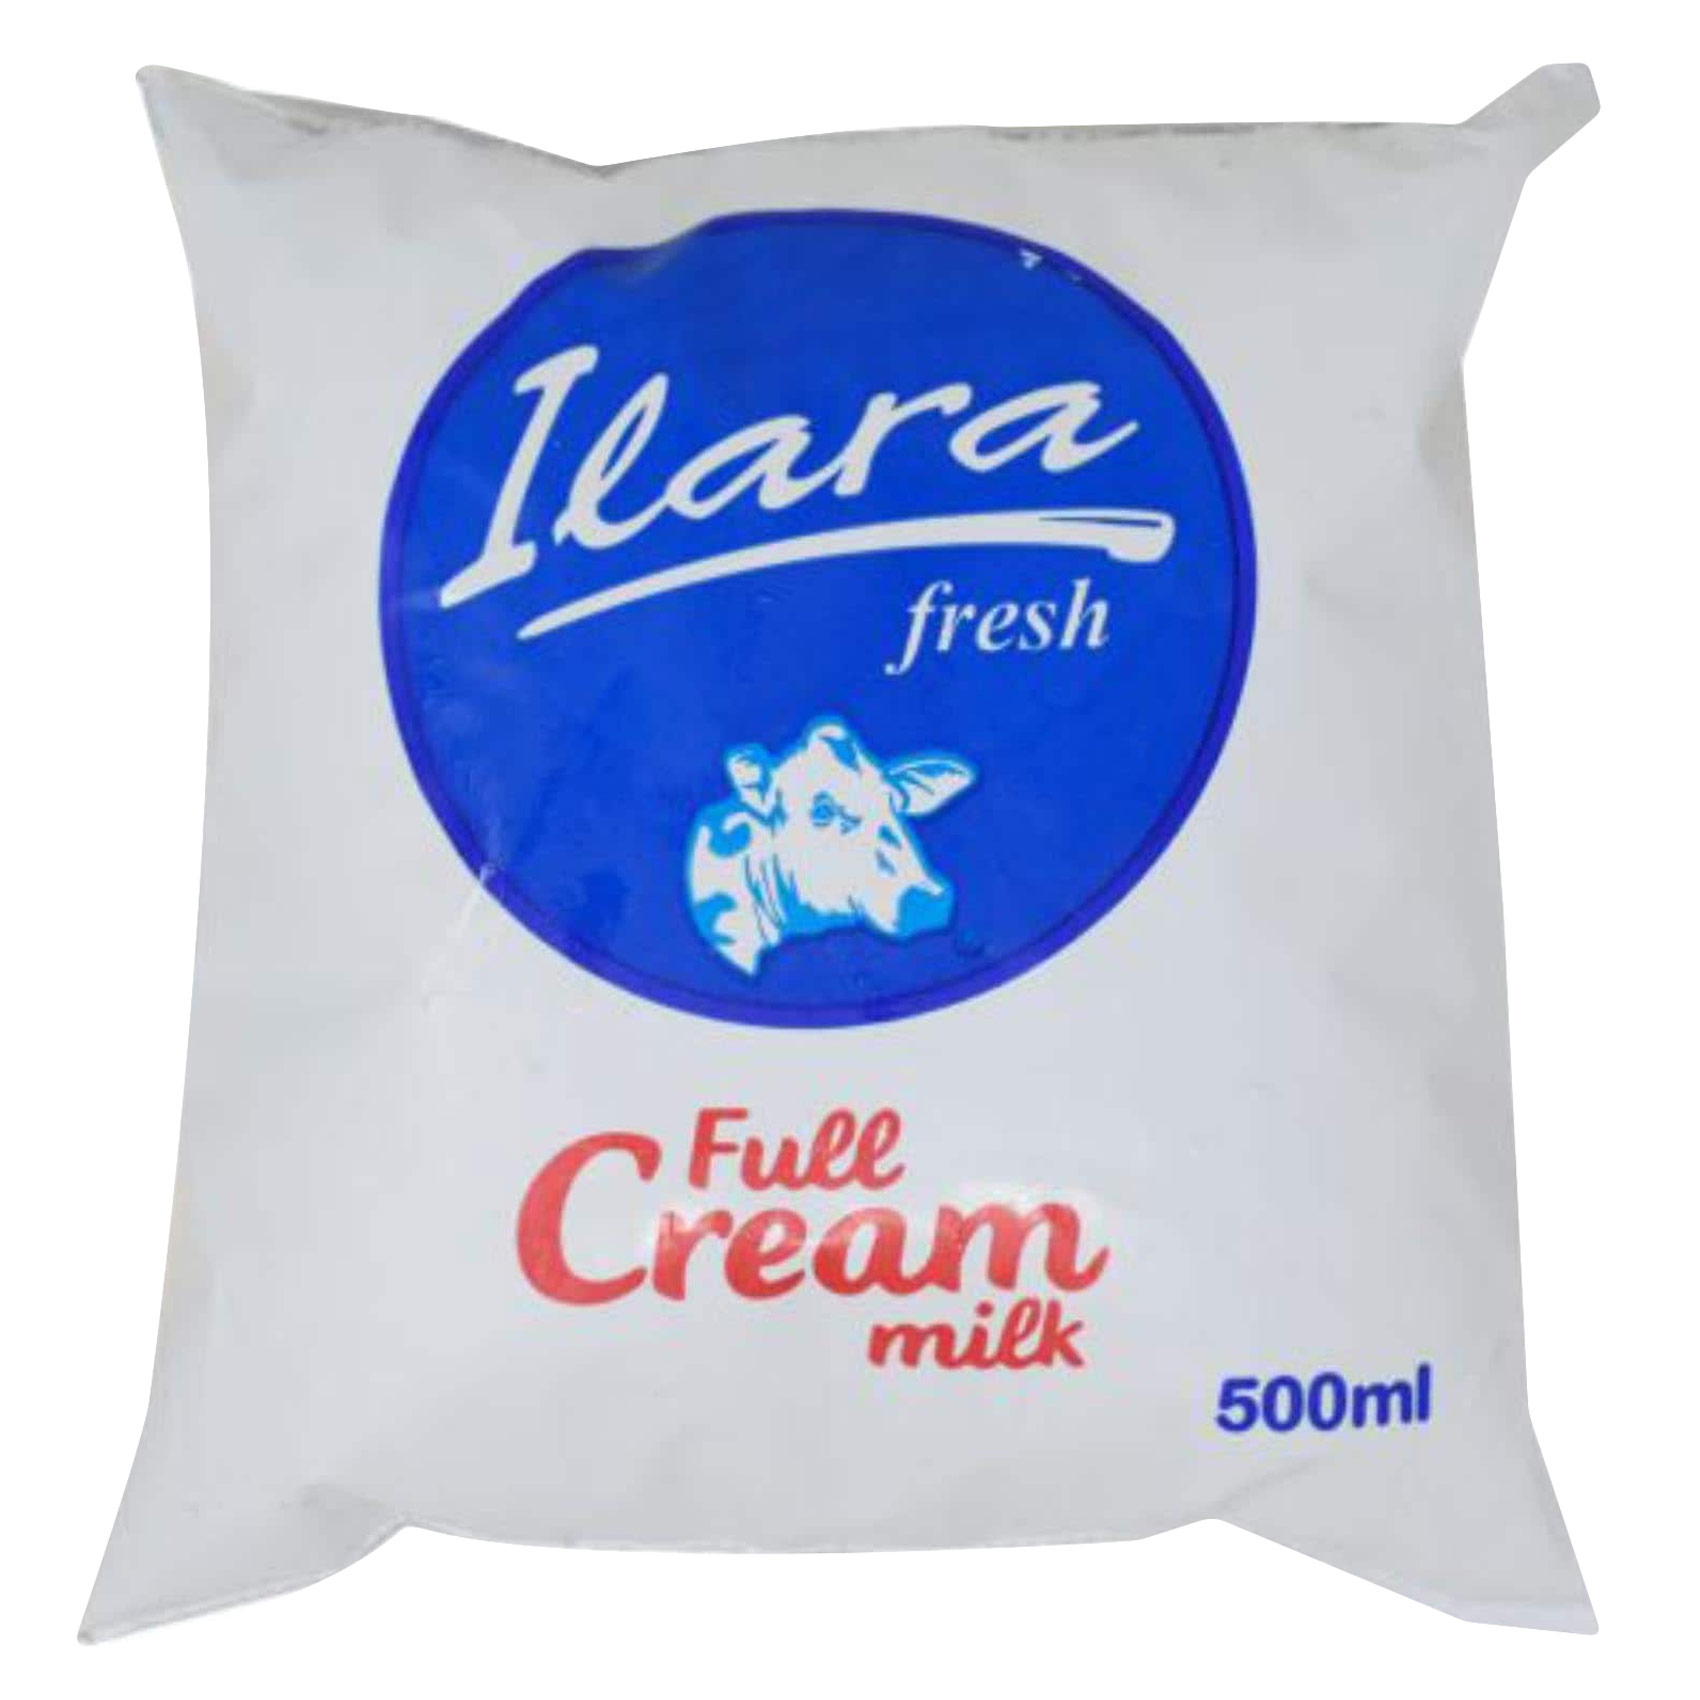 Ilara FRESH Full Cream Whole Milk 500ml